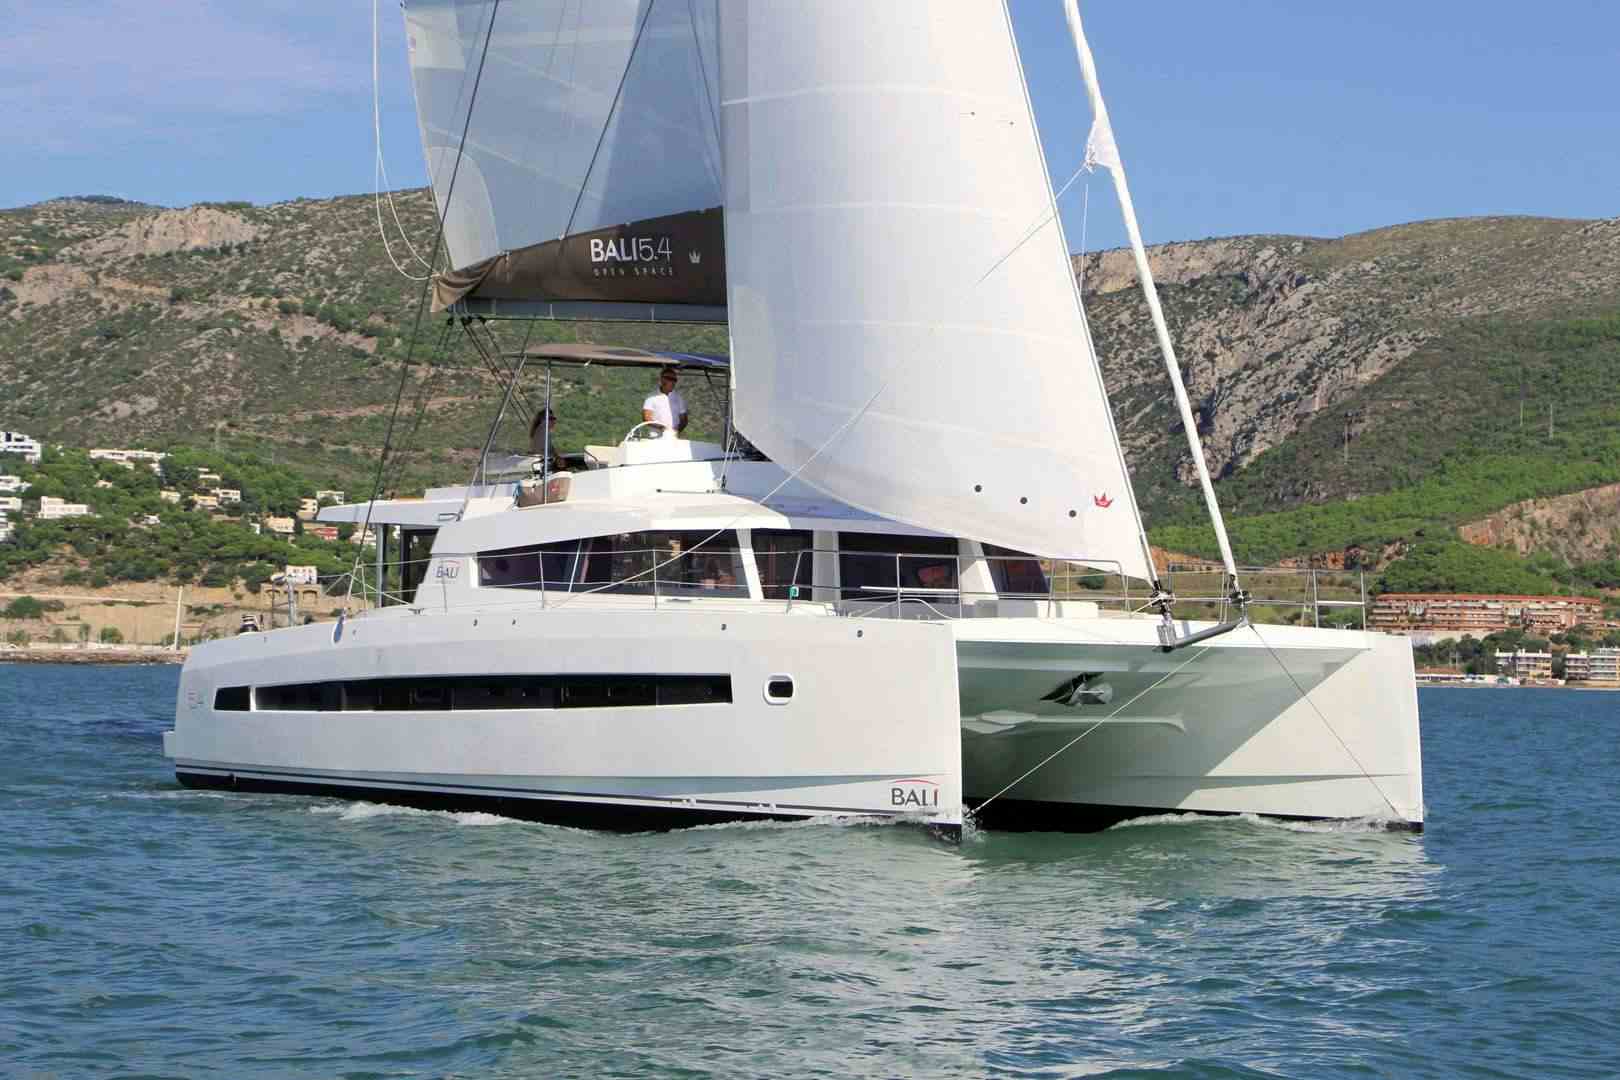 TWO OCEANS - Yacht Charter El Rompido & Boat hire in W. Med - Spain/Balearics, Caribbean Leewards, Caribbean Windwards, Caribbean Virgin Islands (BVI) 1